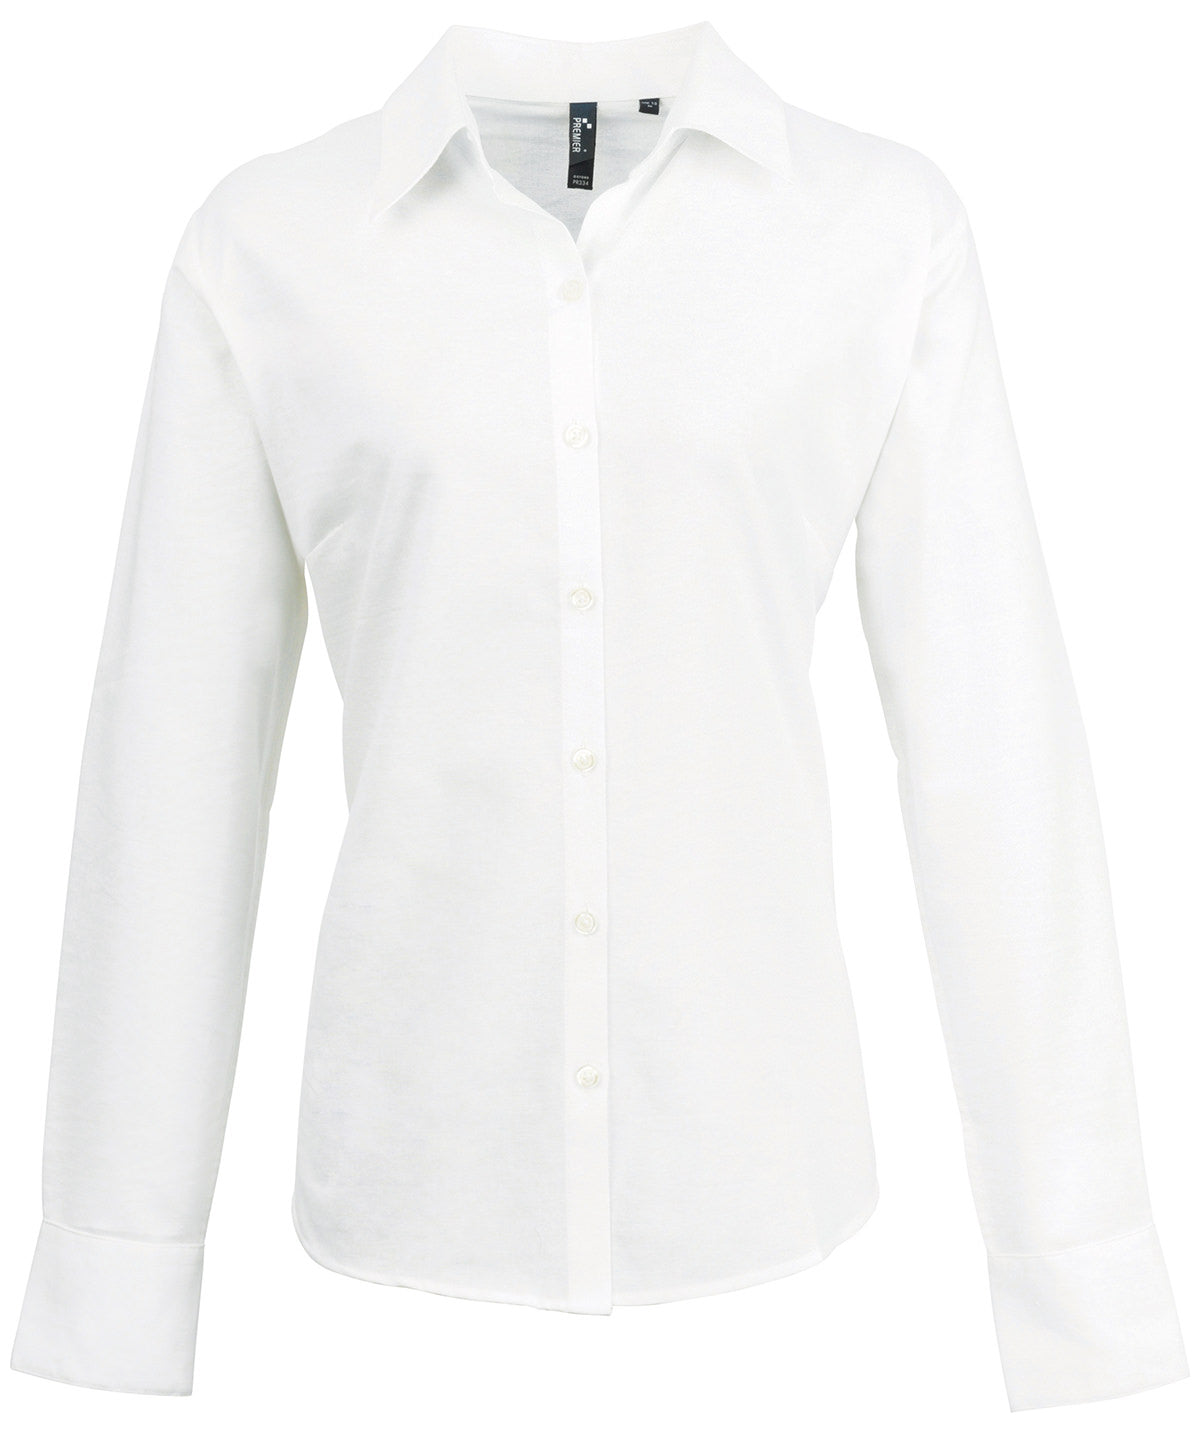 Bolir - Women's Signature Oxford Long Sleeve Shirt